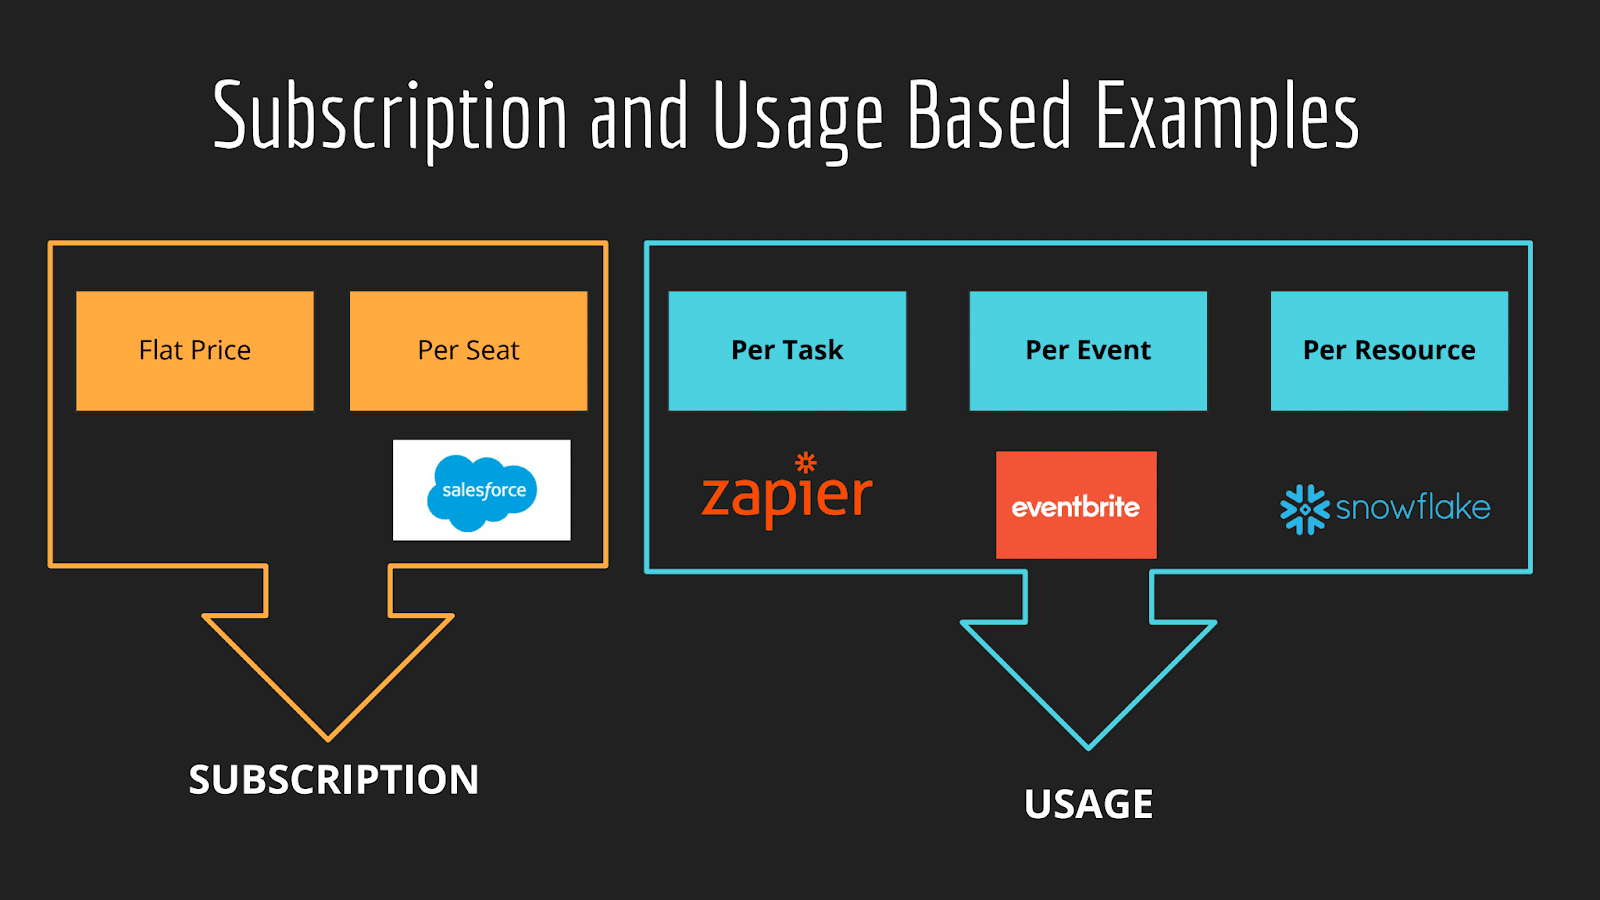 Subscription and usage-based examples. Per seat: Salesforce. Per task: Zapier. Per event: Eventbrite. Per resource: Snowflake.